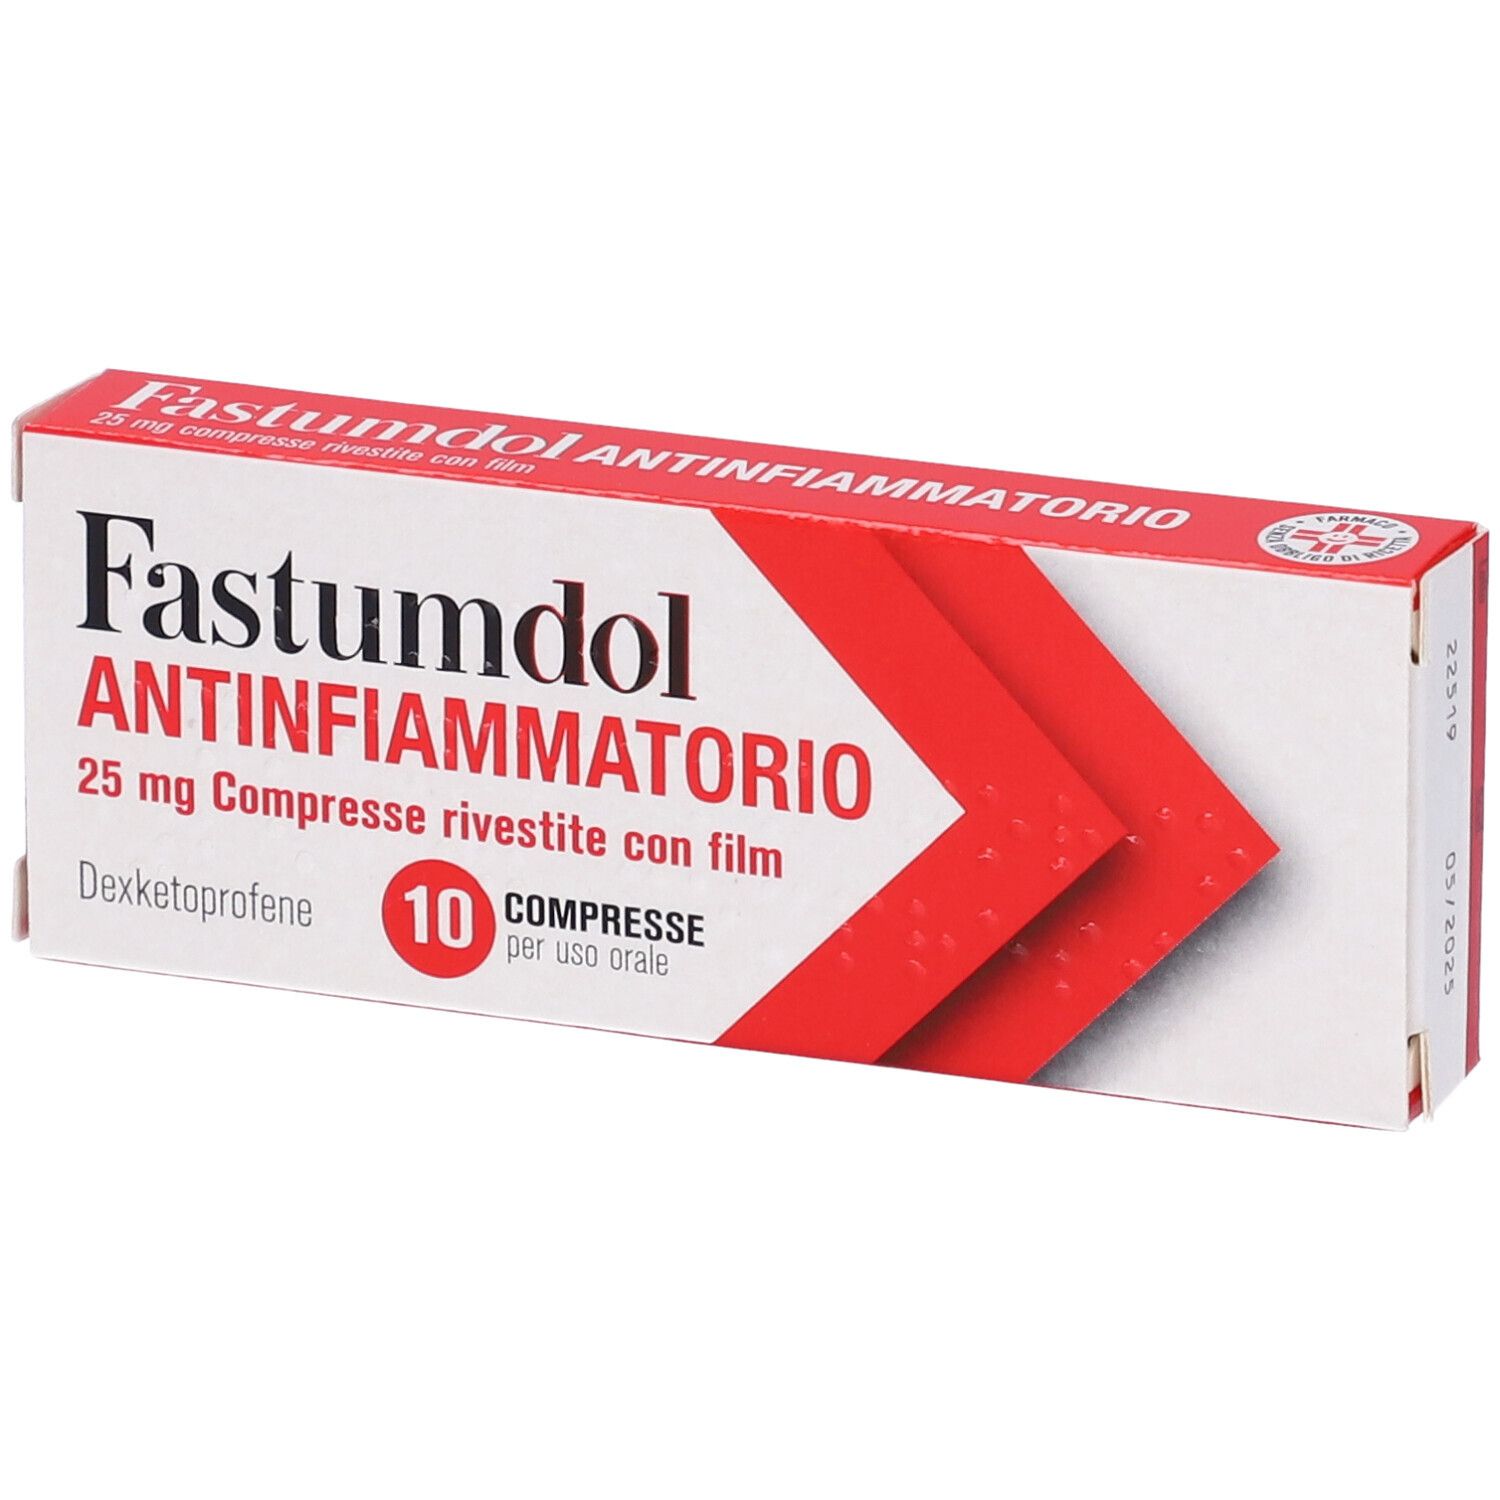 Fastumdol Antinfiammatorio